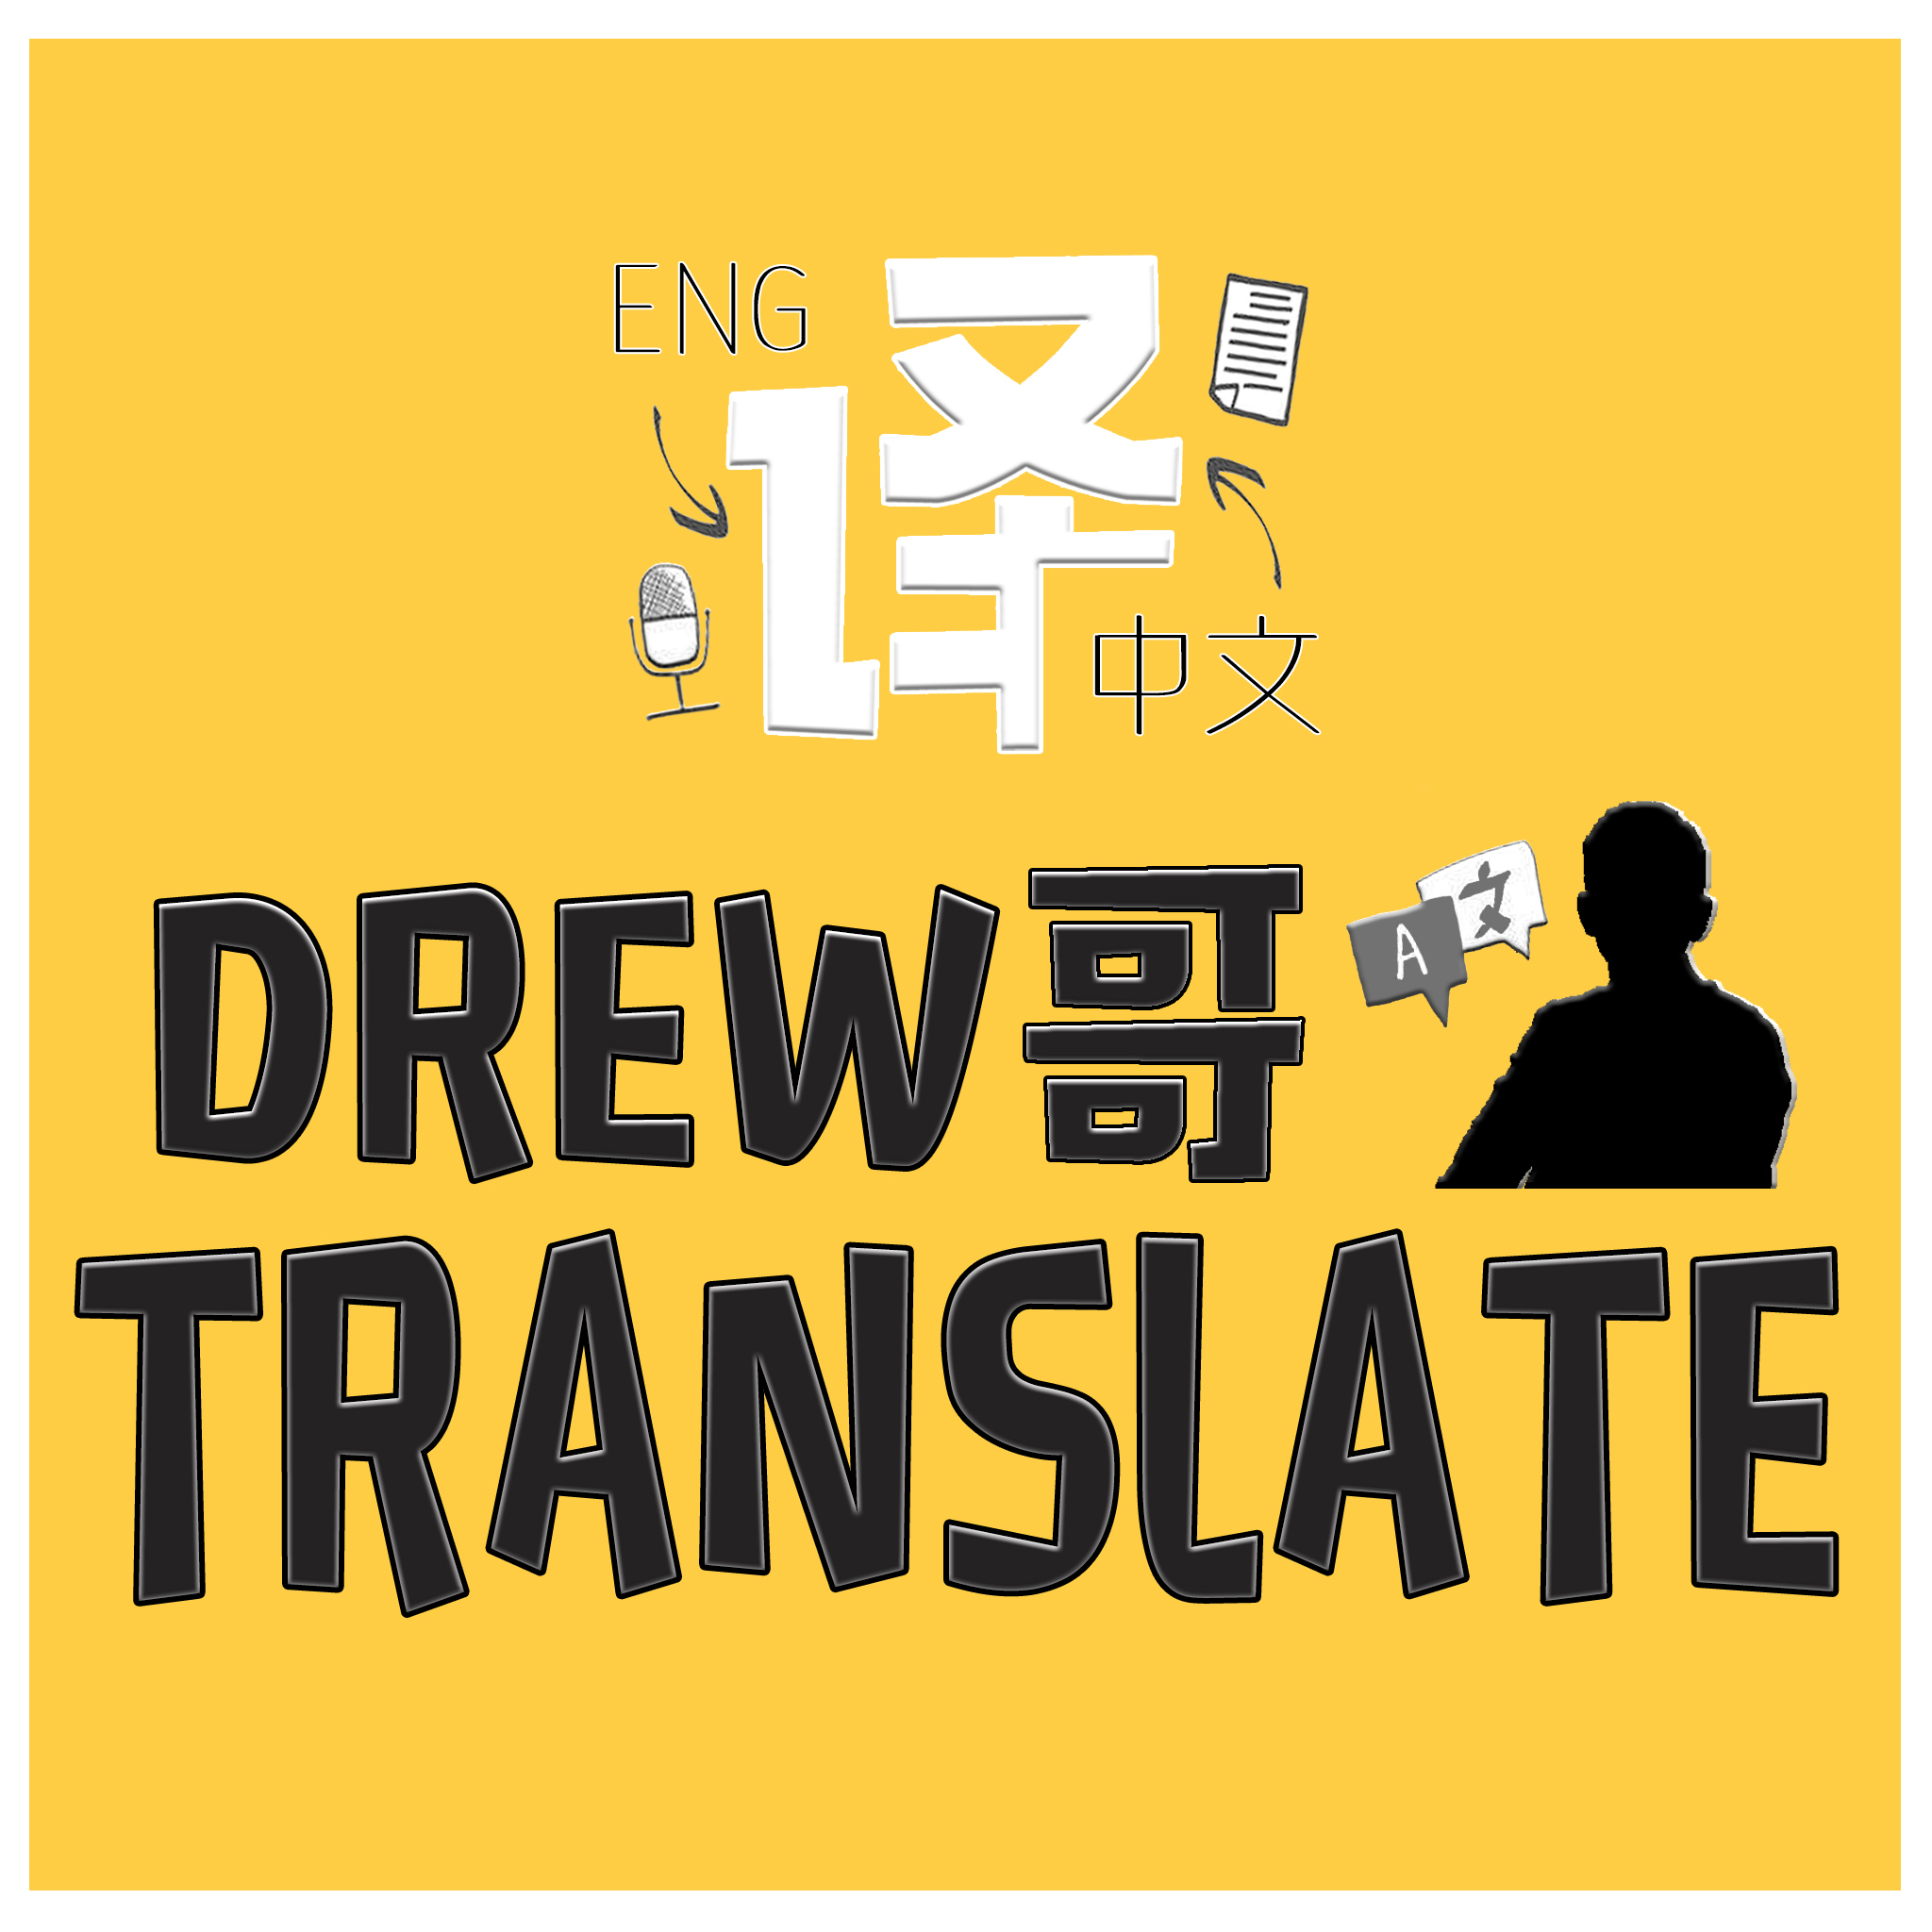 Introducing: Drew哥Translate